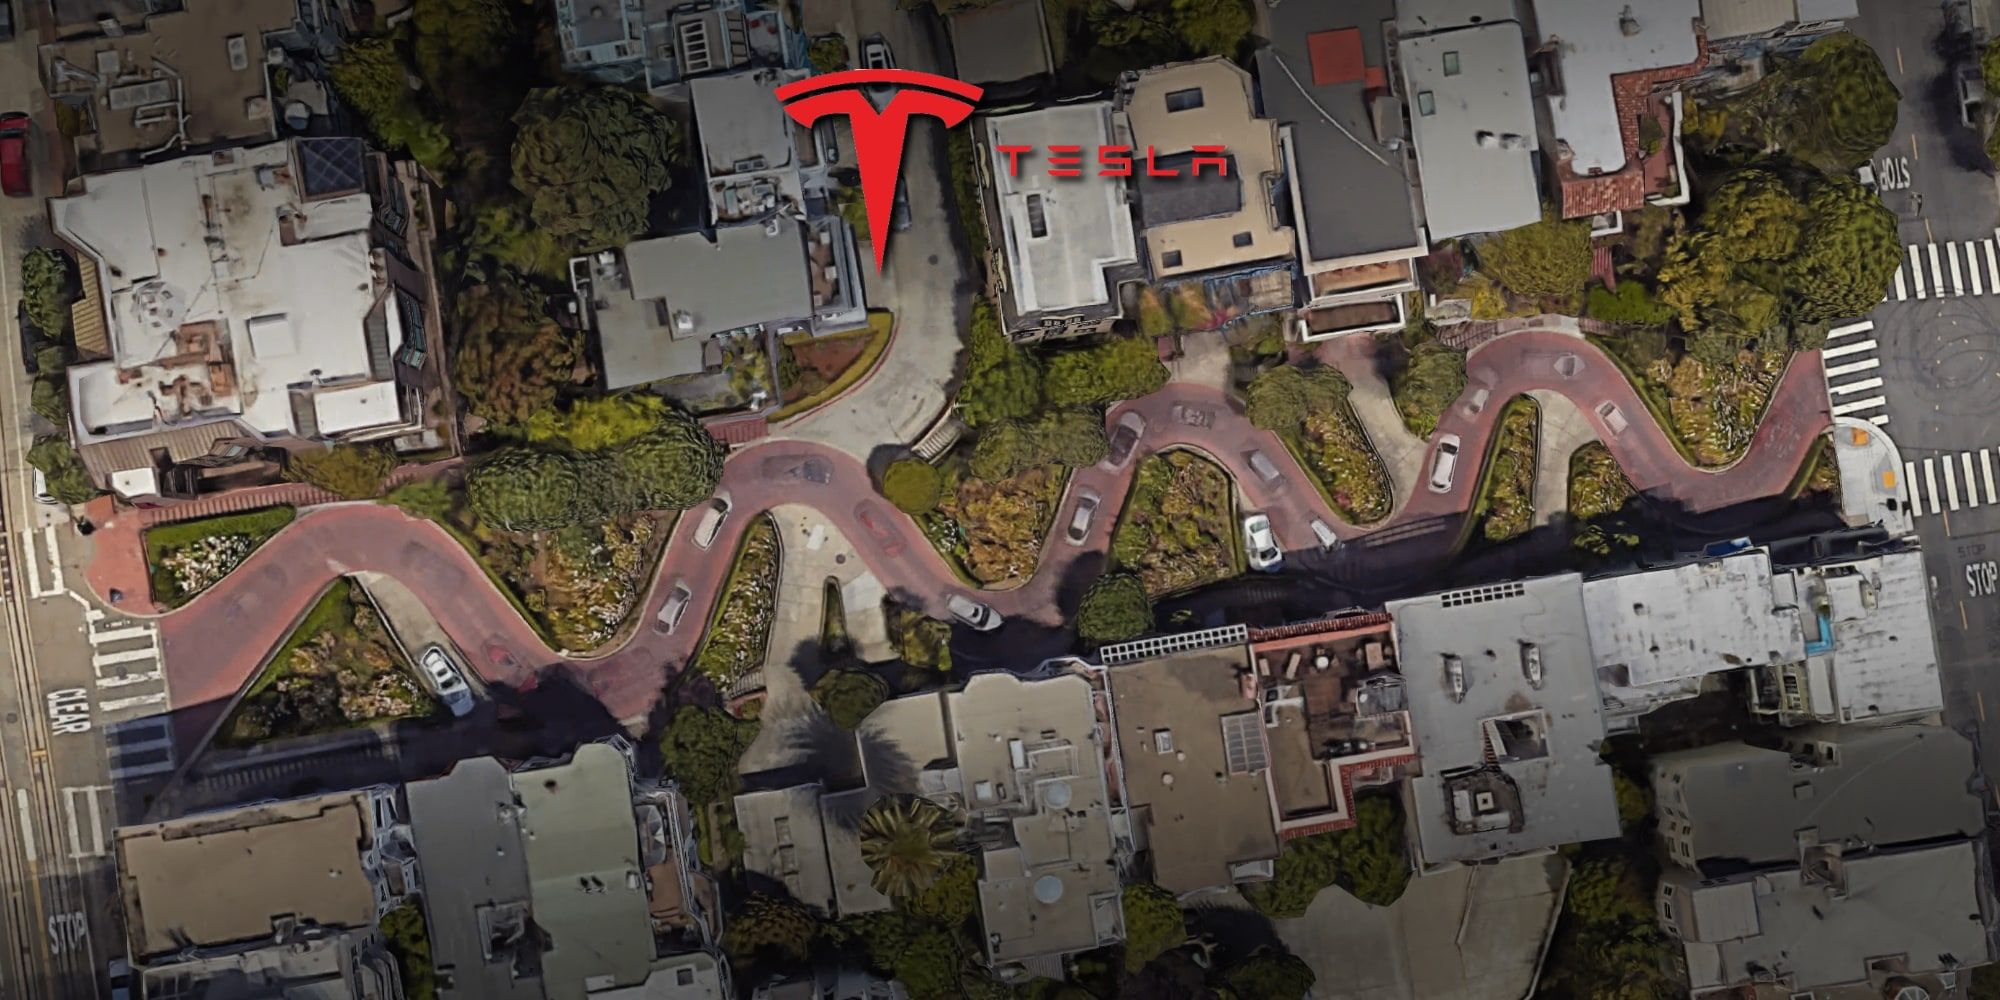 Watch Tesla’s Self-Driving Tech Navigate A Ridiculous San Francisco Street